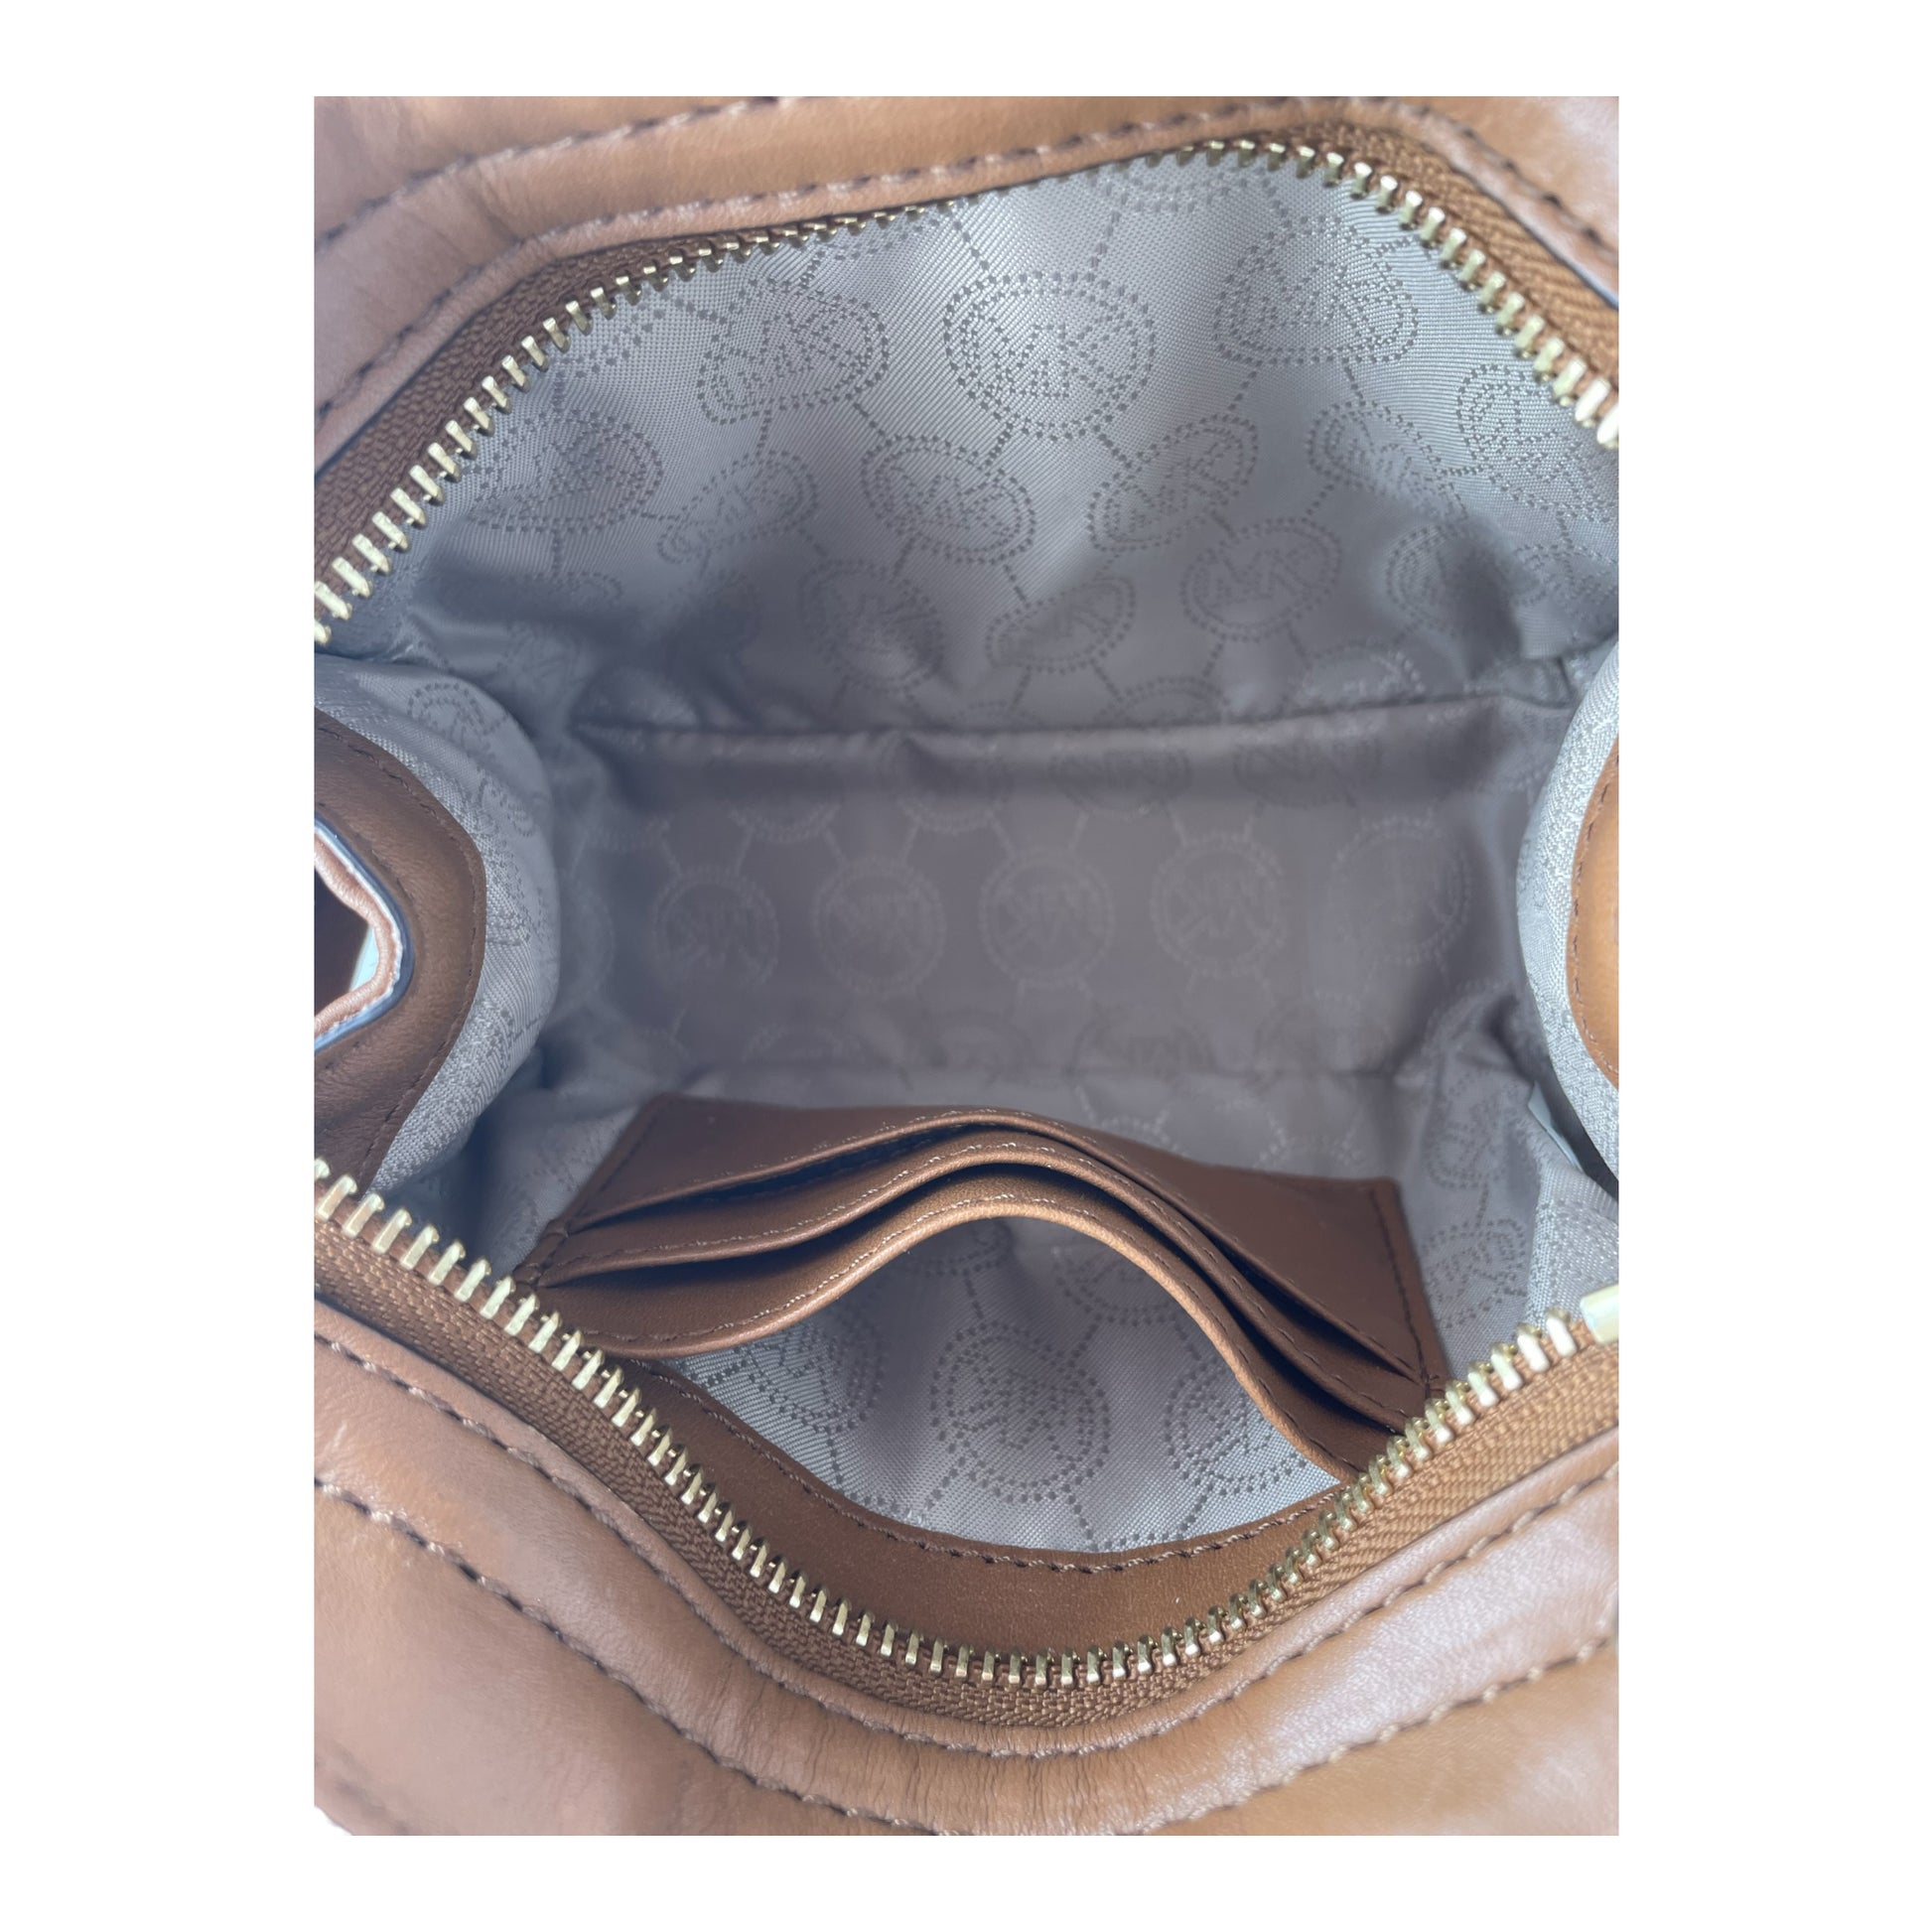 Michael Kors Selma Stud Mini Leather Pale Gold Crossbody Bag Very Good